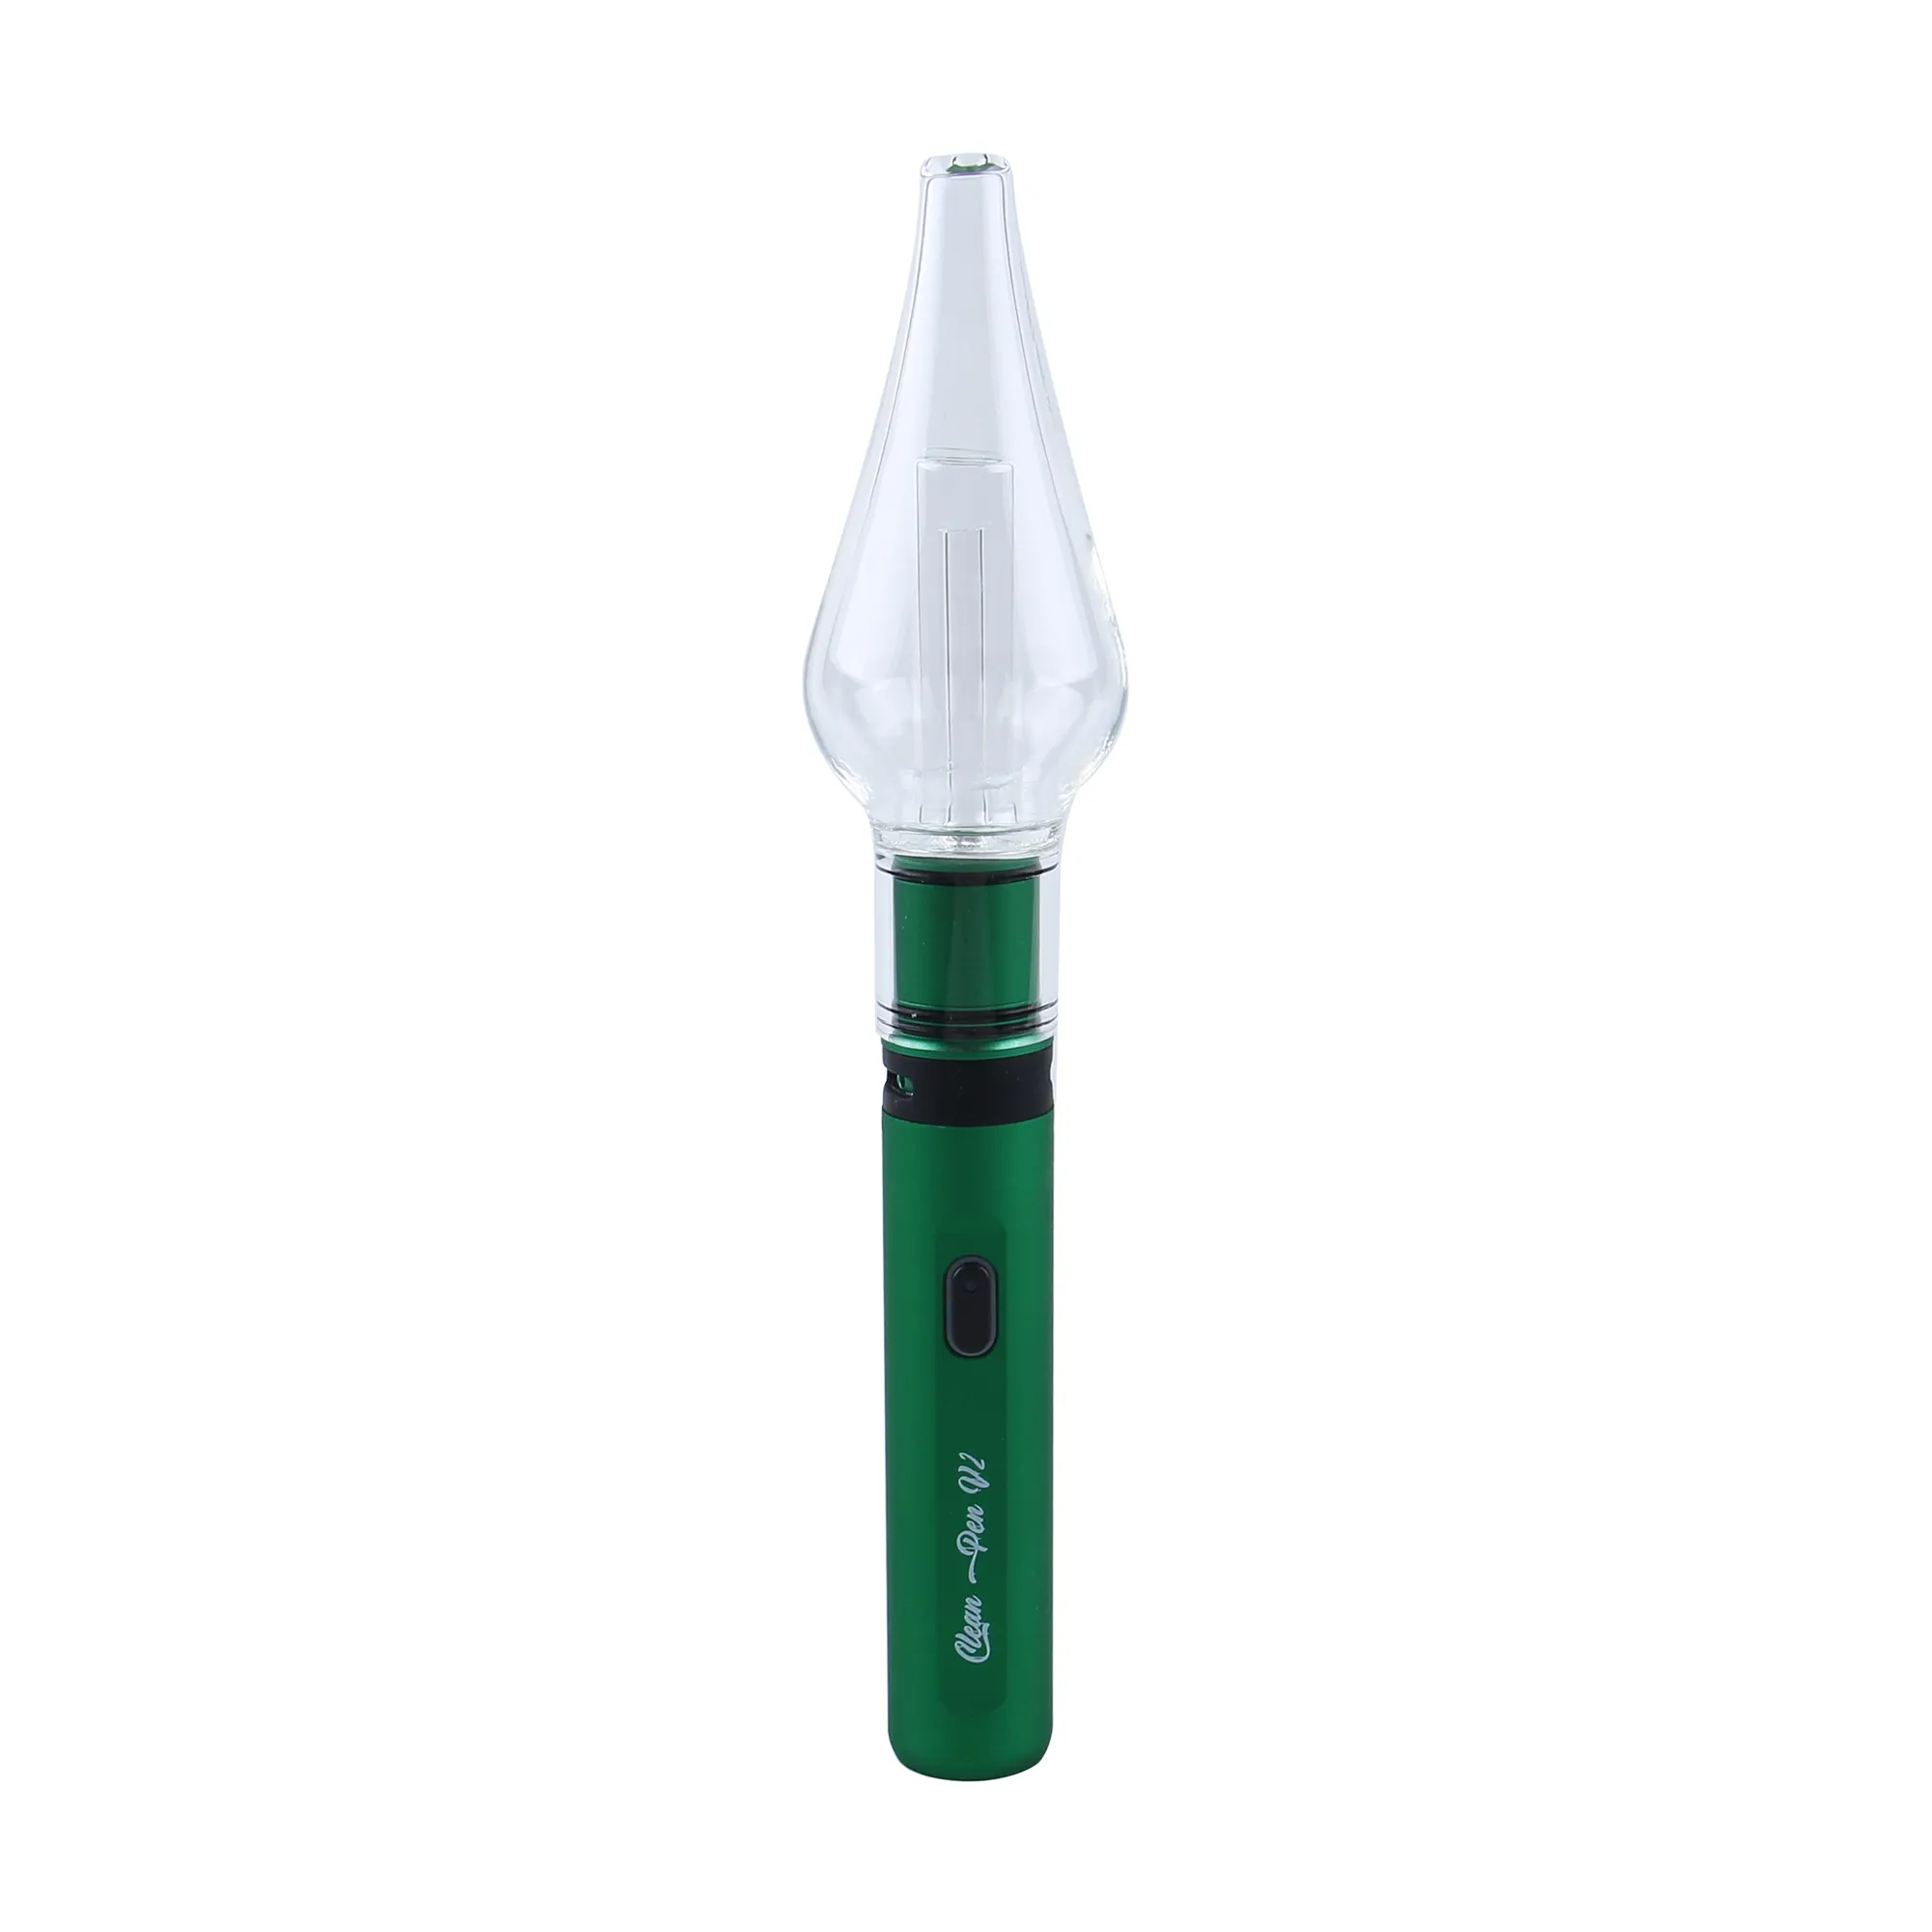 2021 Portable Vape Dabs Glass Dab Pipe Smoking Vape Mod Kit Travel Kit Clean Pen V2 Smart Hand Held Device For Wax/Dry Herb